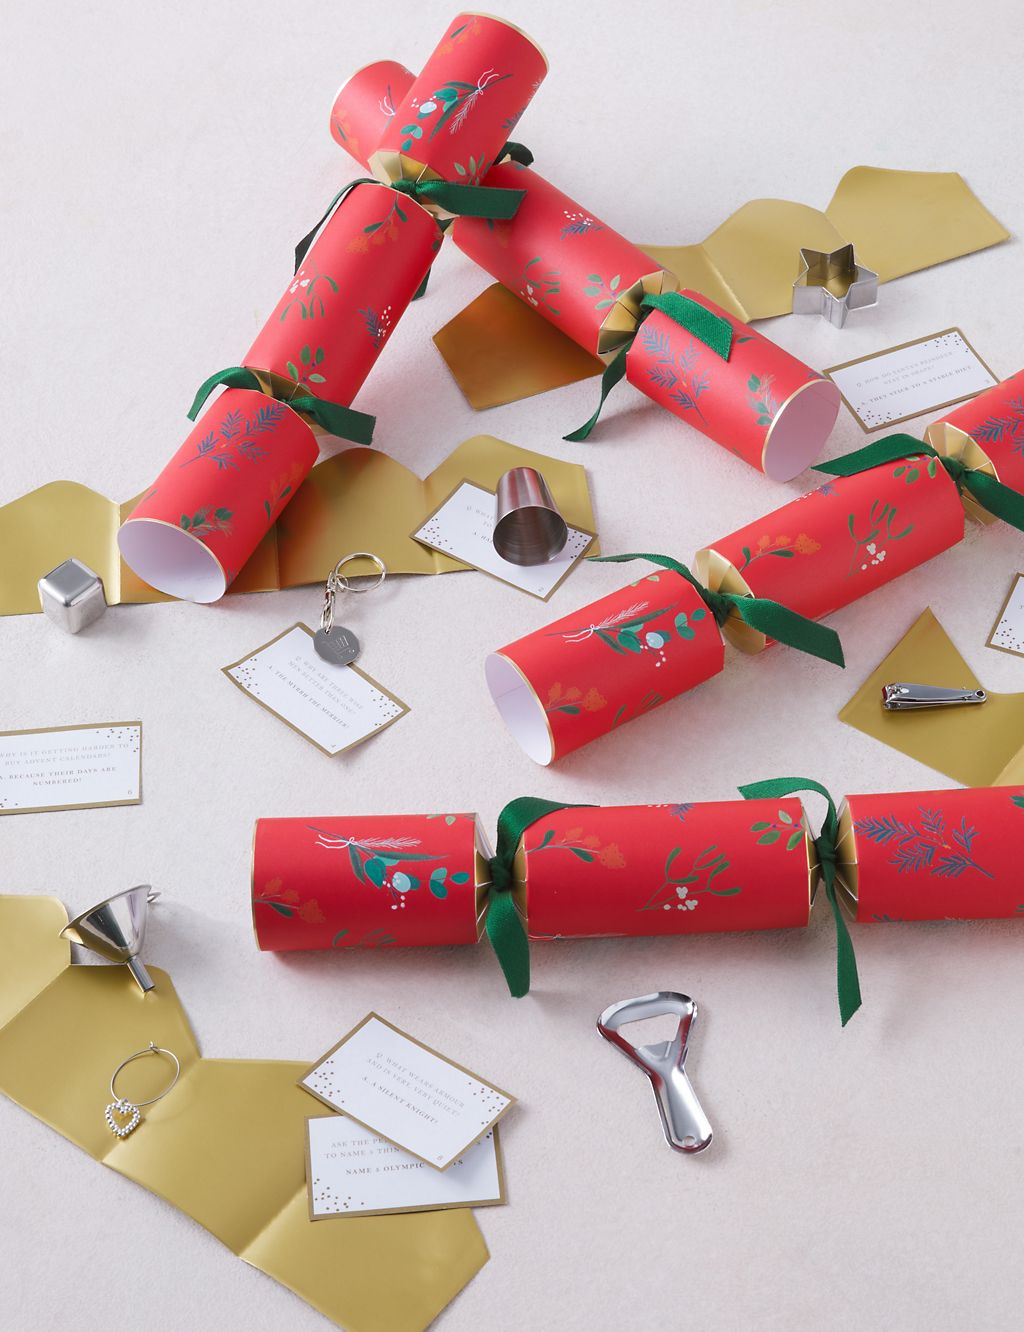 Luxury Heritage Christmas Crackers - Pack of 8 in 1 Design 1 of 4